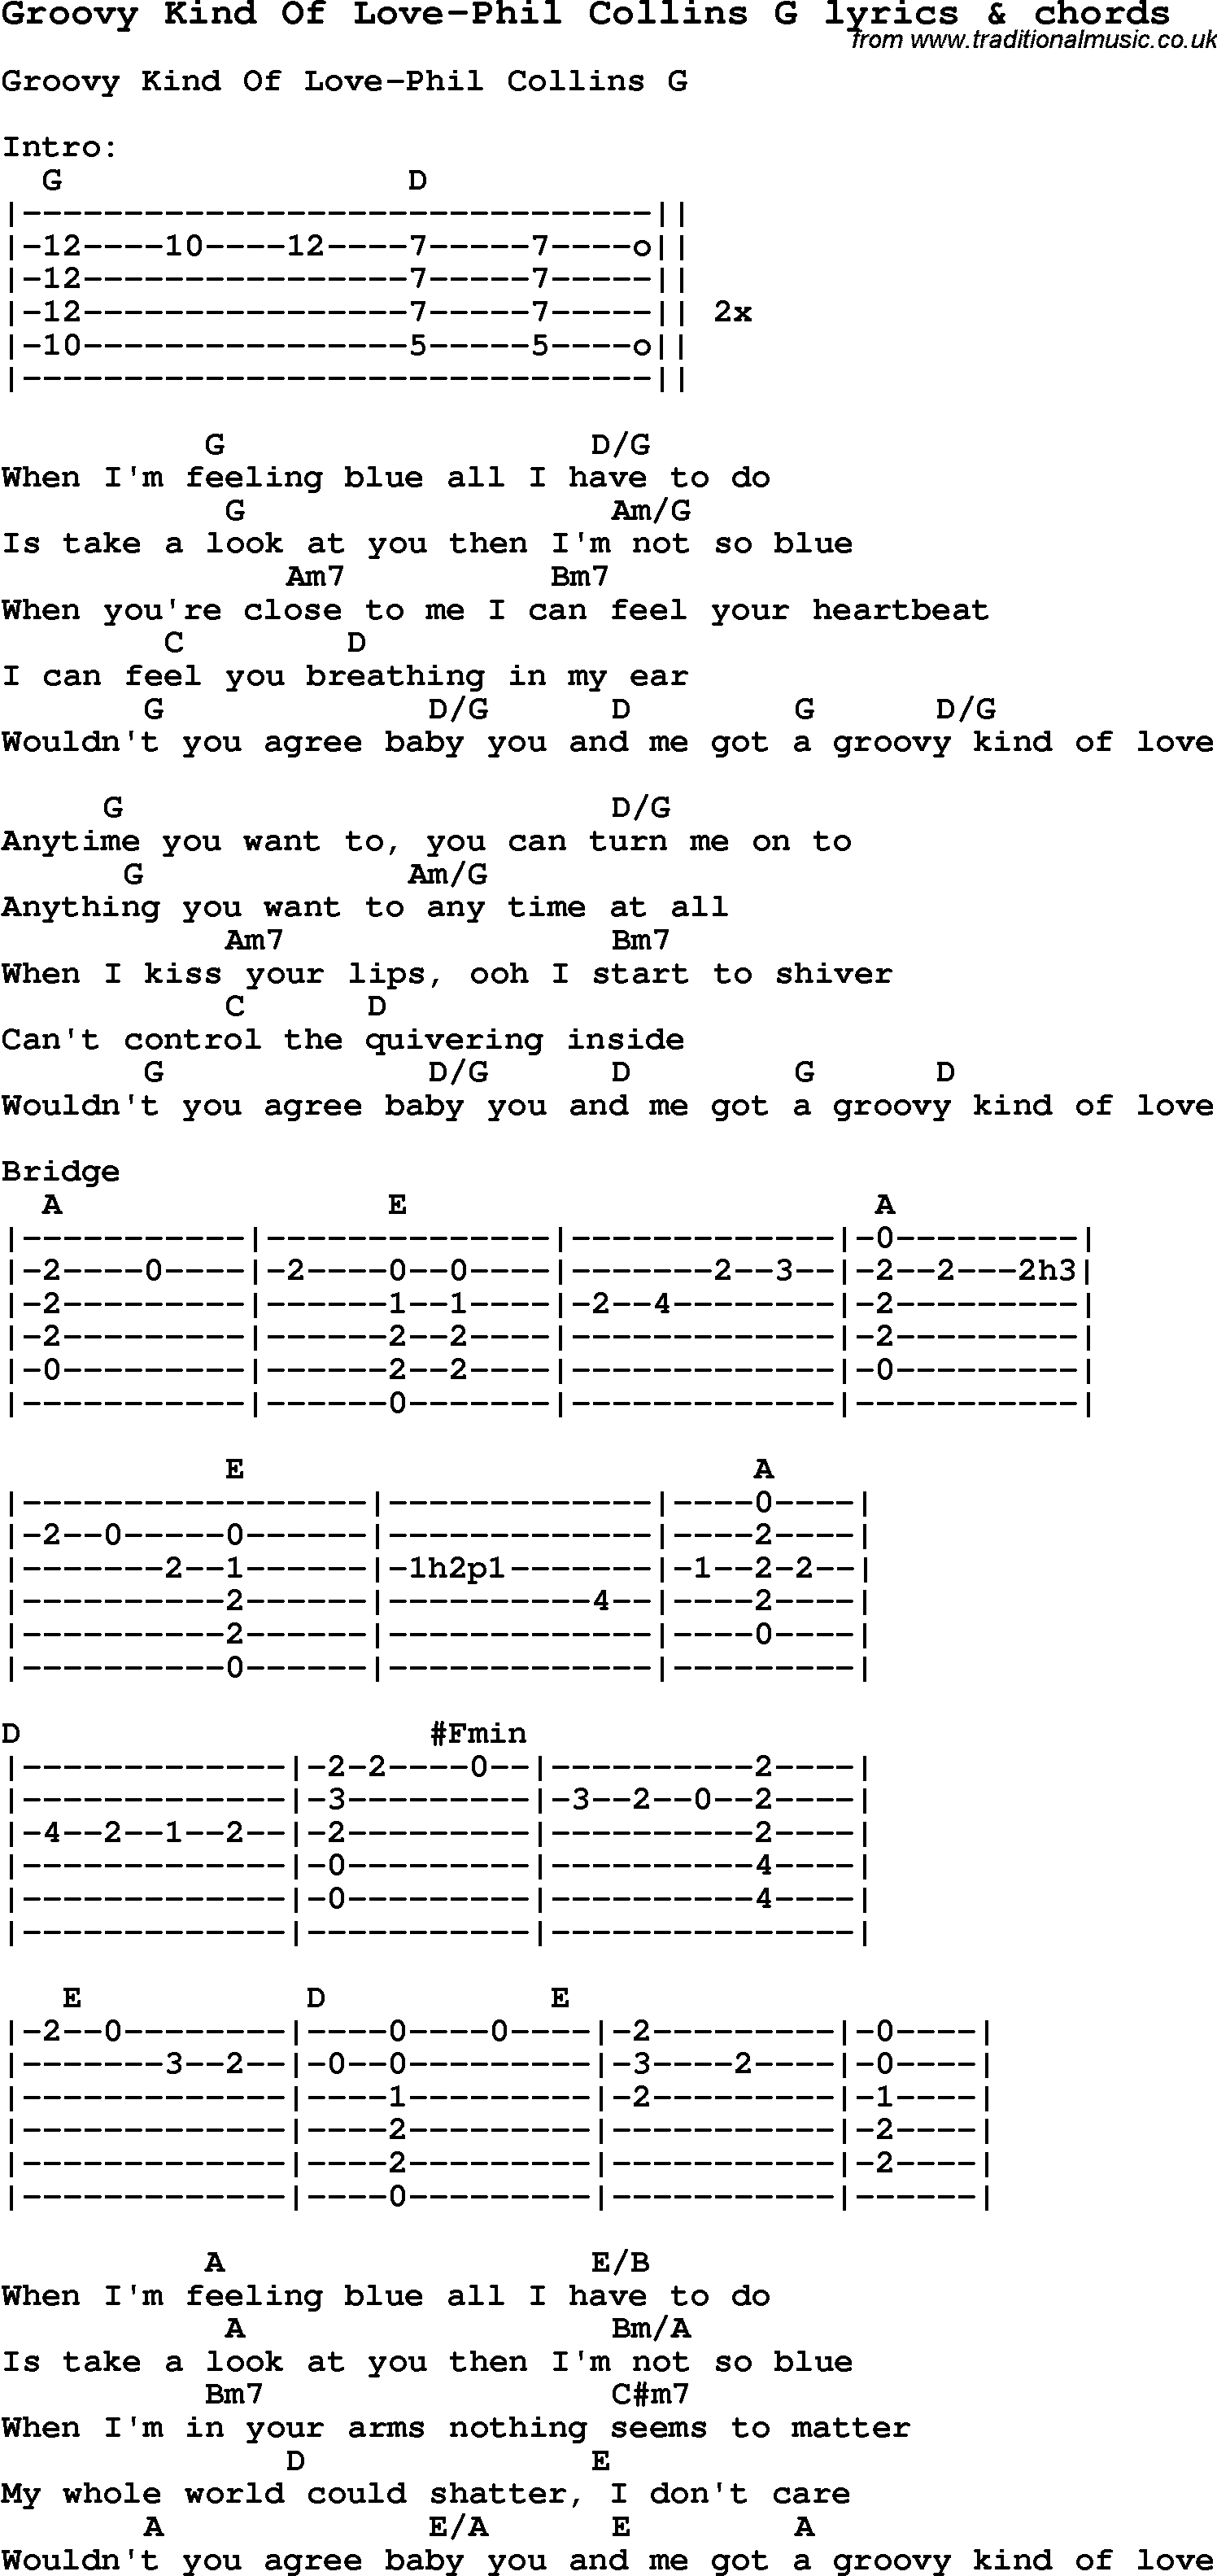 Love Song Lyrics for: Groovy Kind Of Love-Phil Collins G with chords for Ukulele, Guitar Banjo etc.